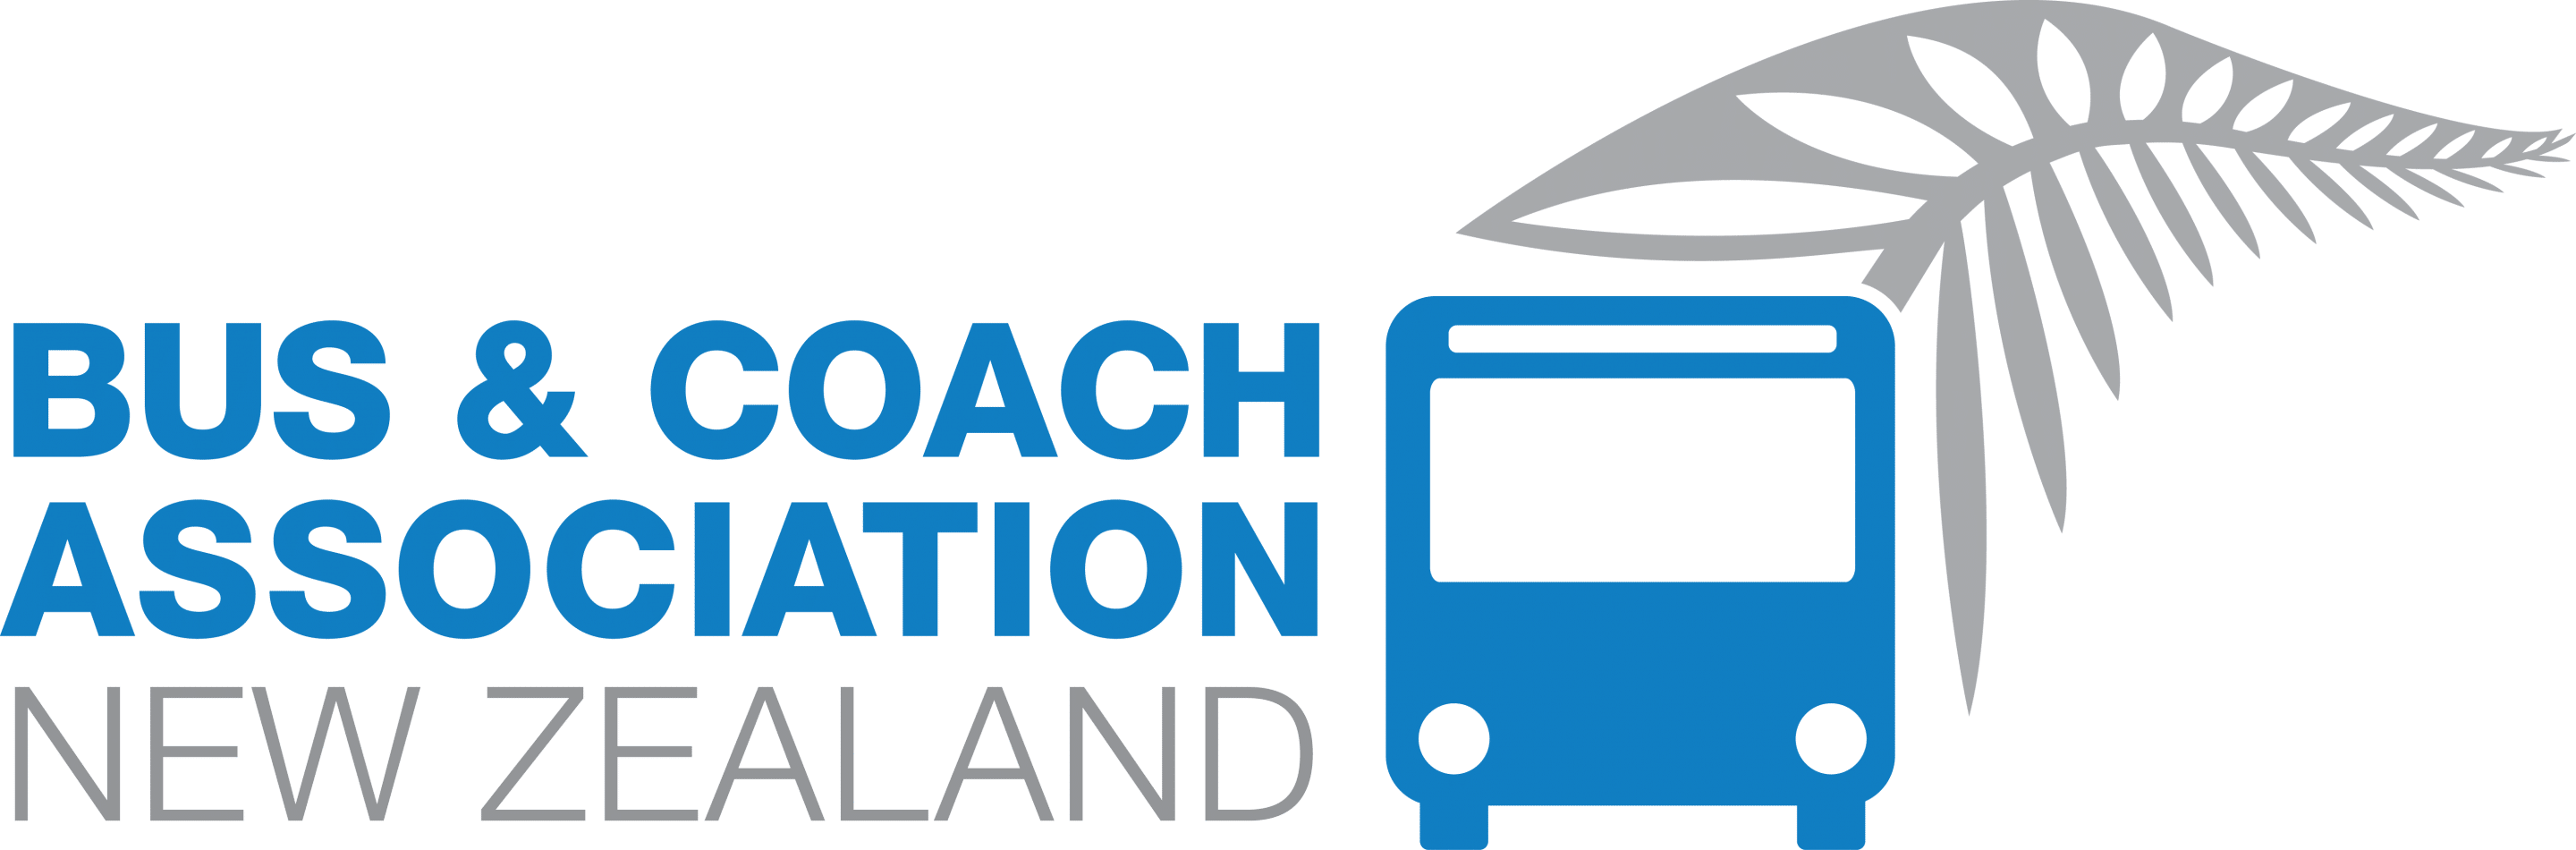 bus and coach association logo